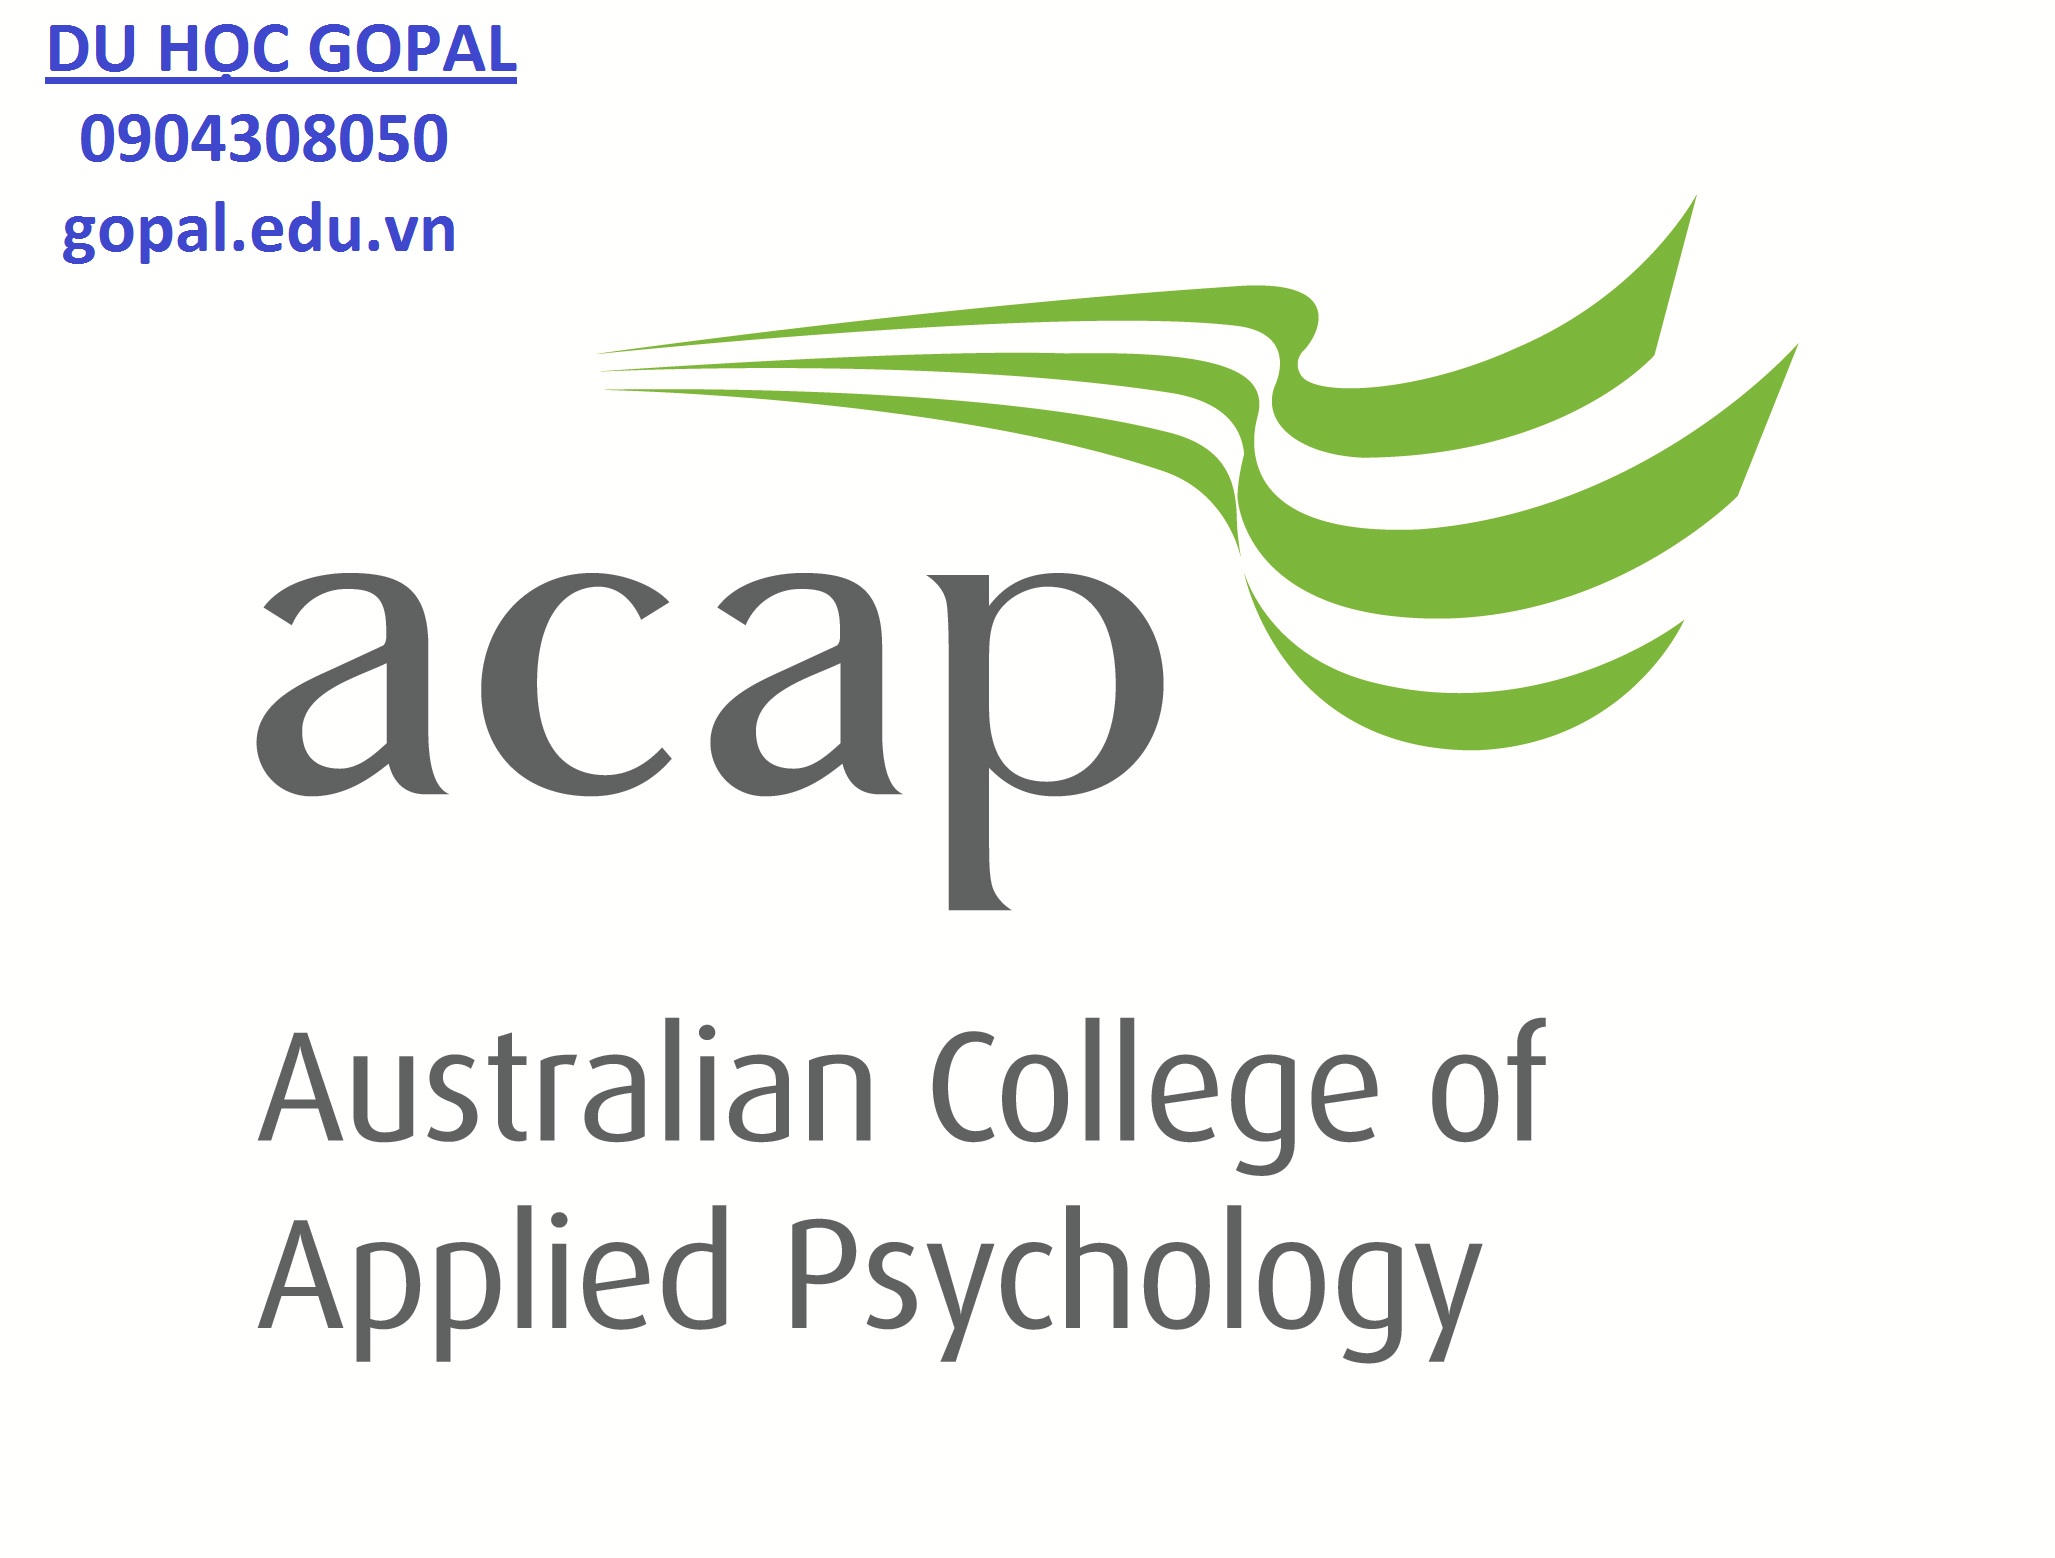 AUSTRALIAN COLLEGE OF APPLIED PSYCHOLOGY